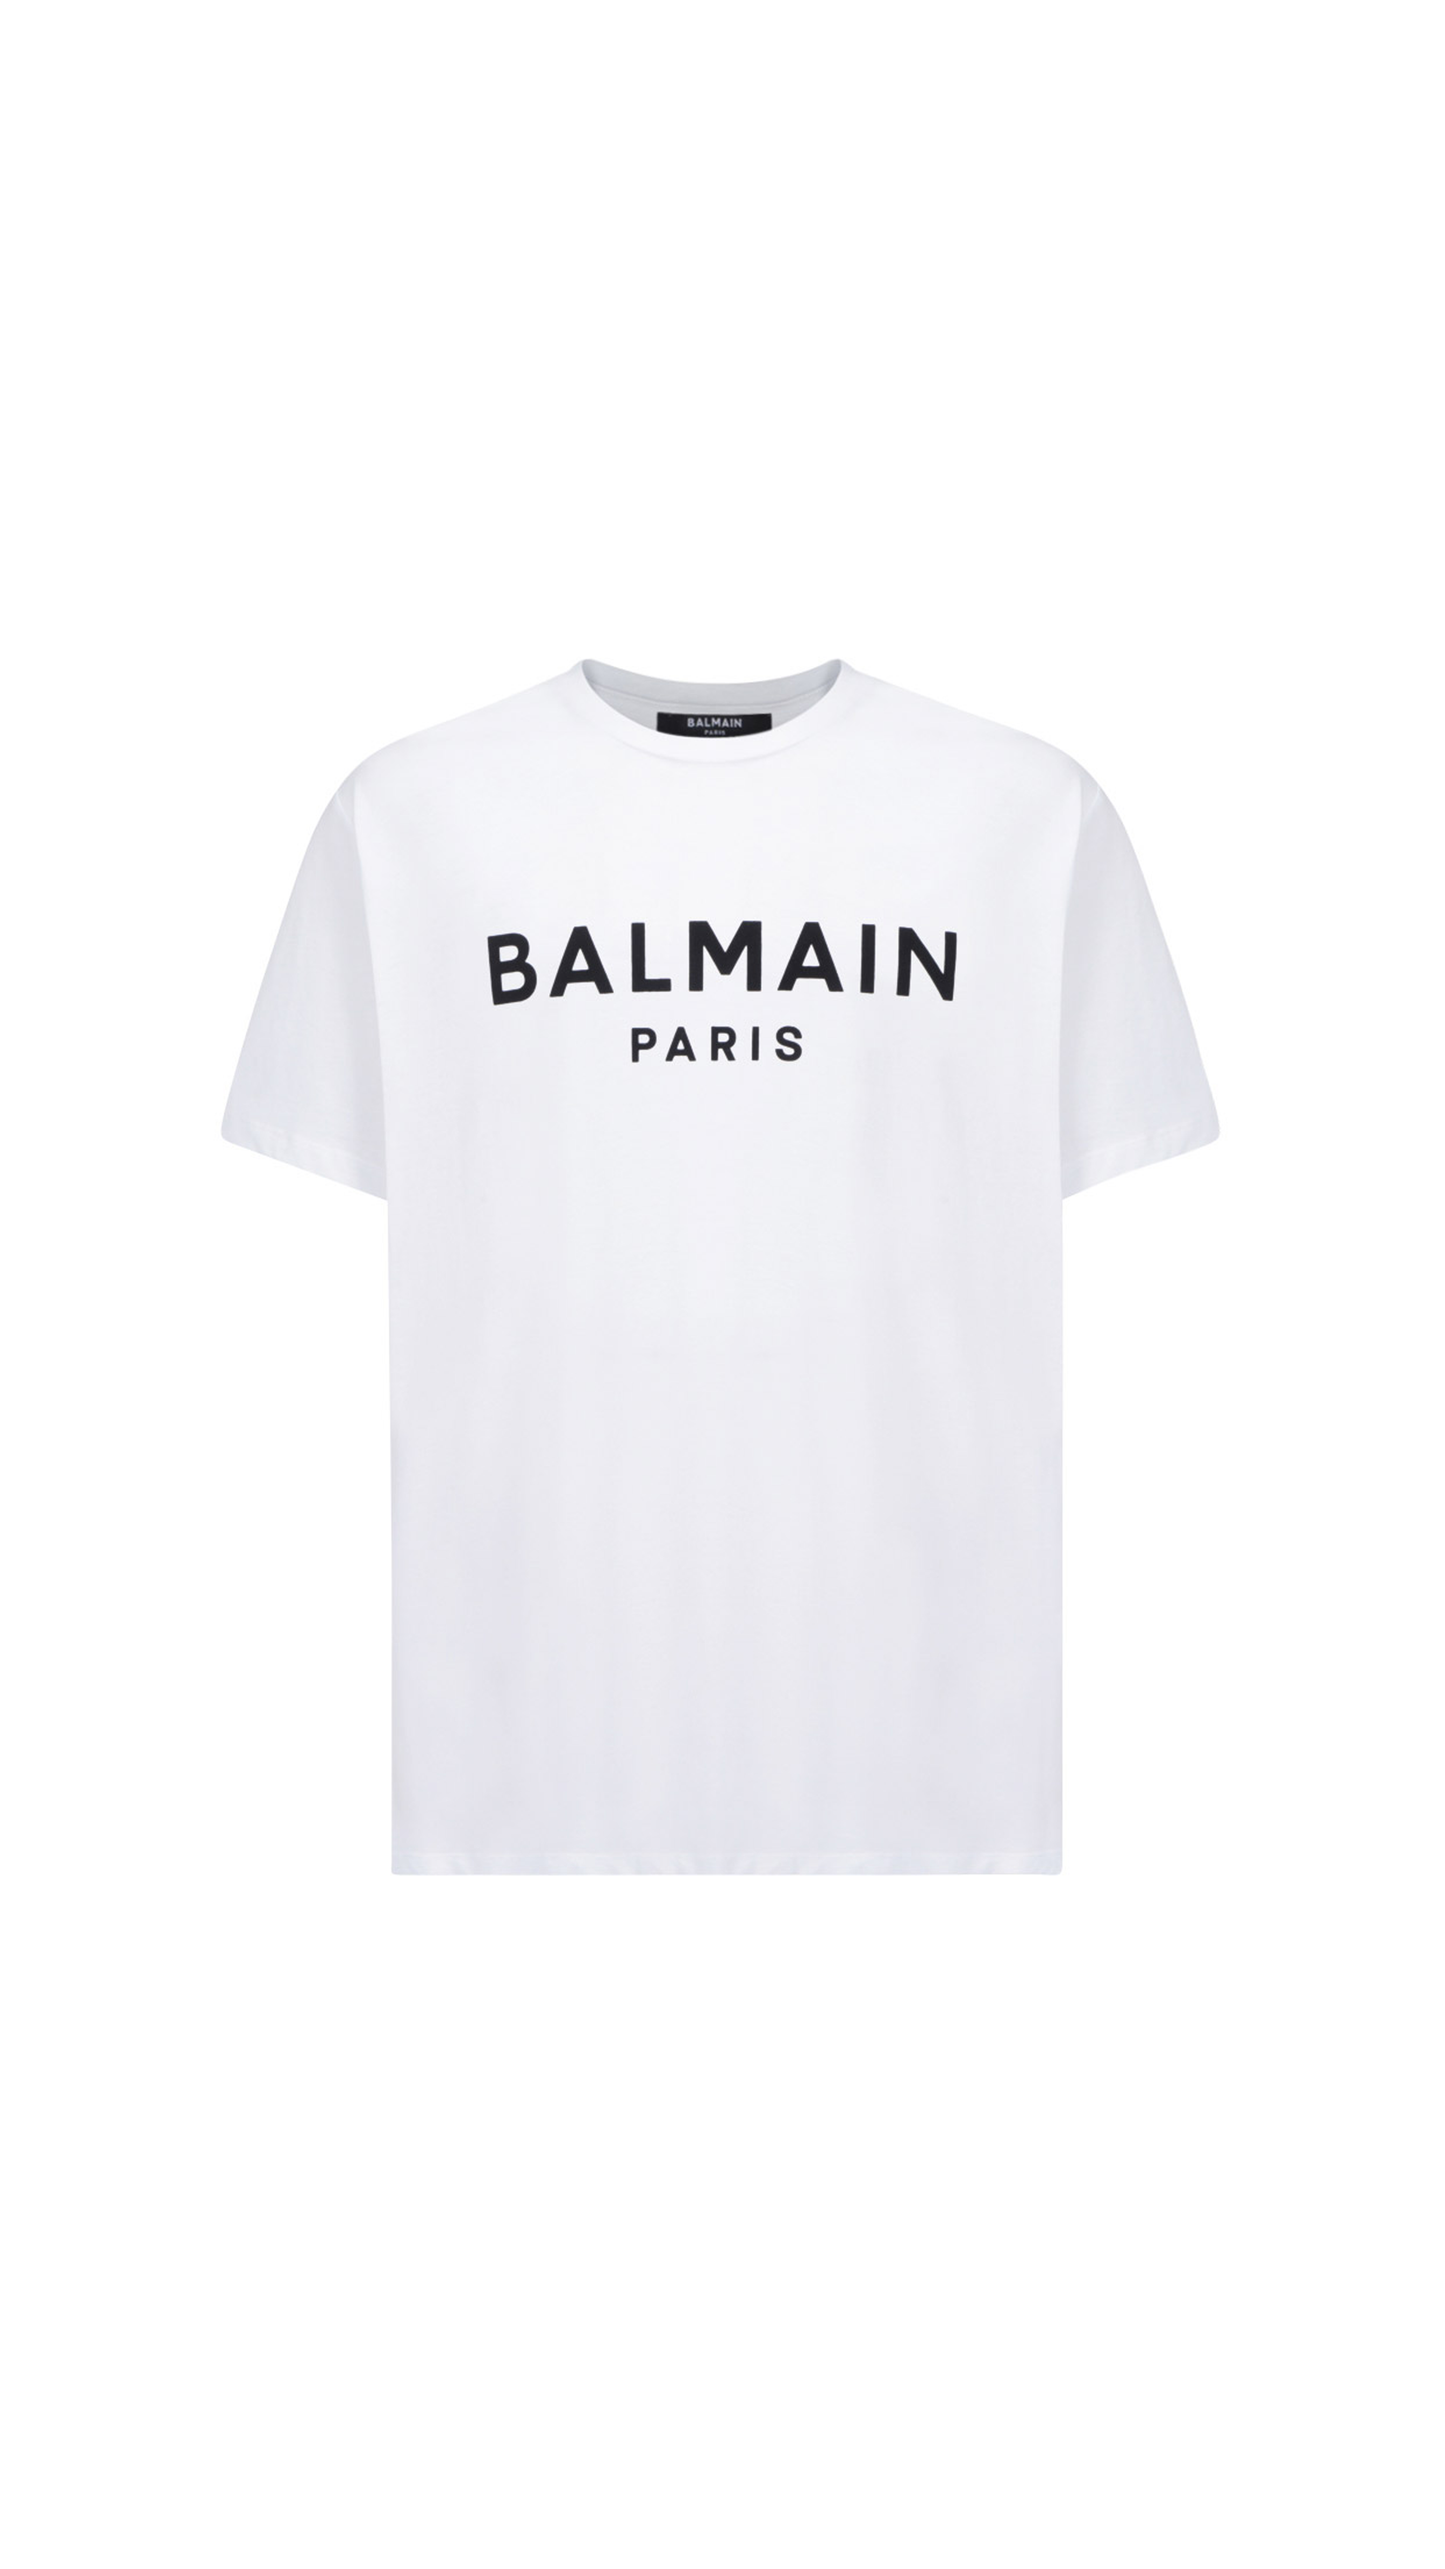 Cotton T-Shirt with Balmain Paris Logo Print - White.